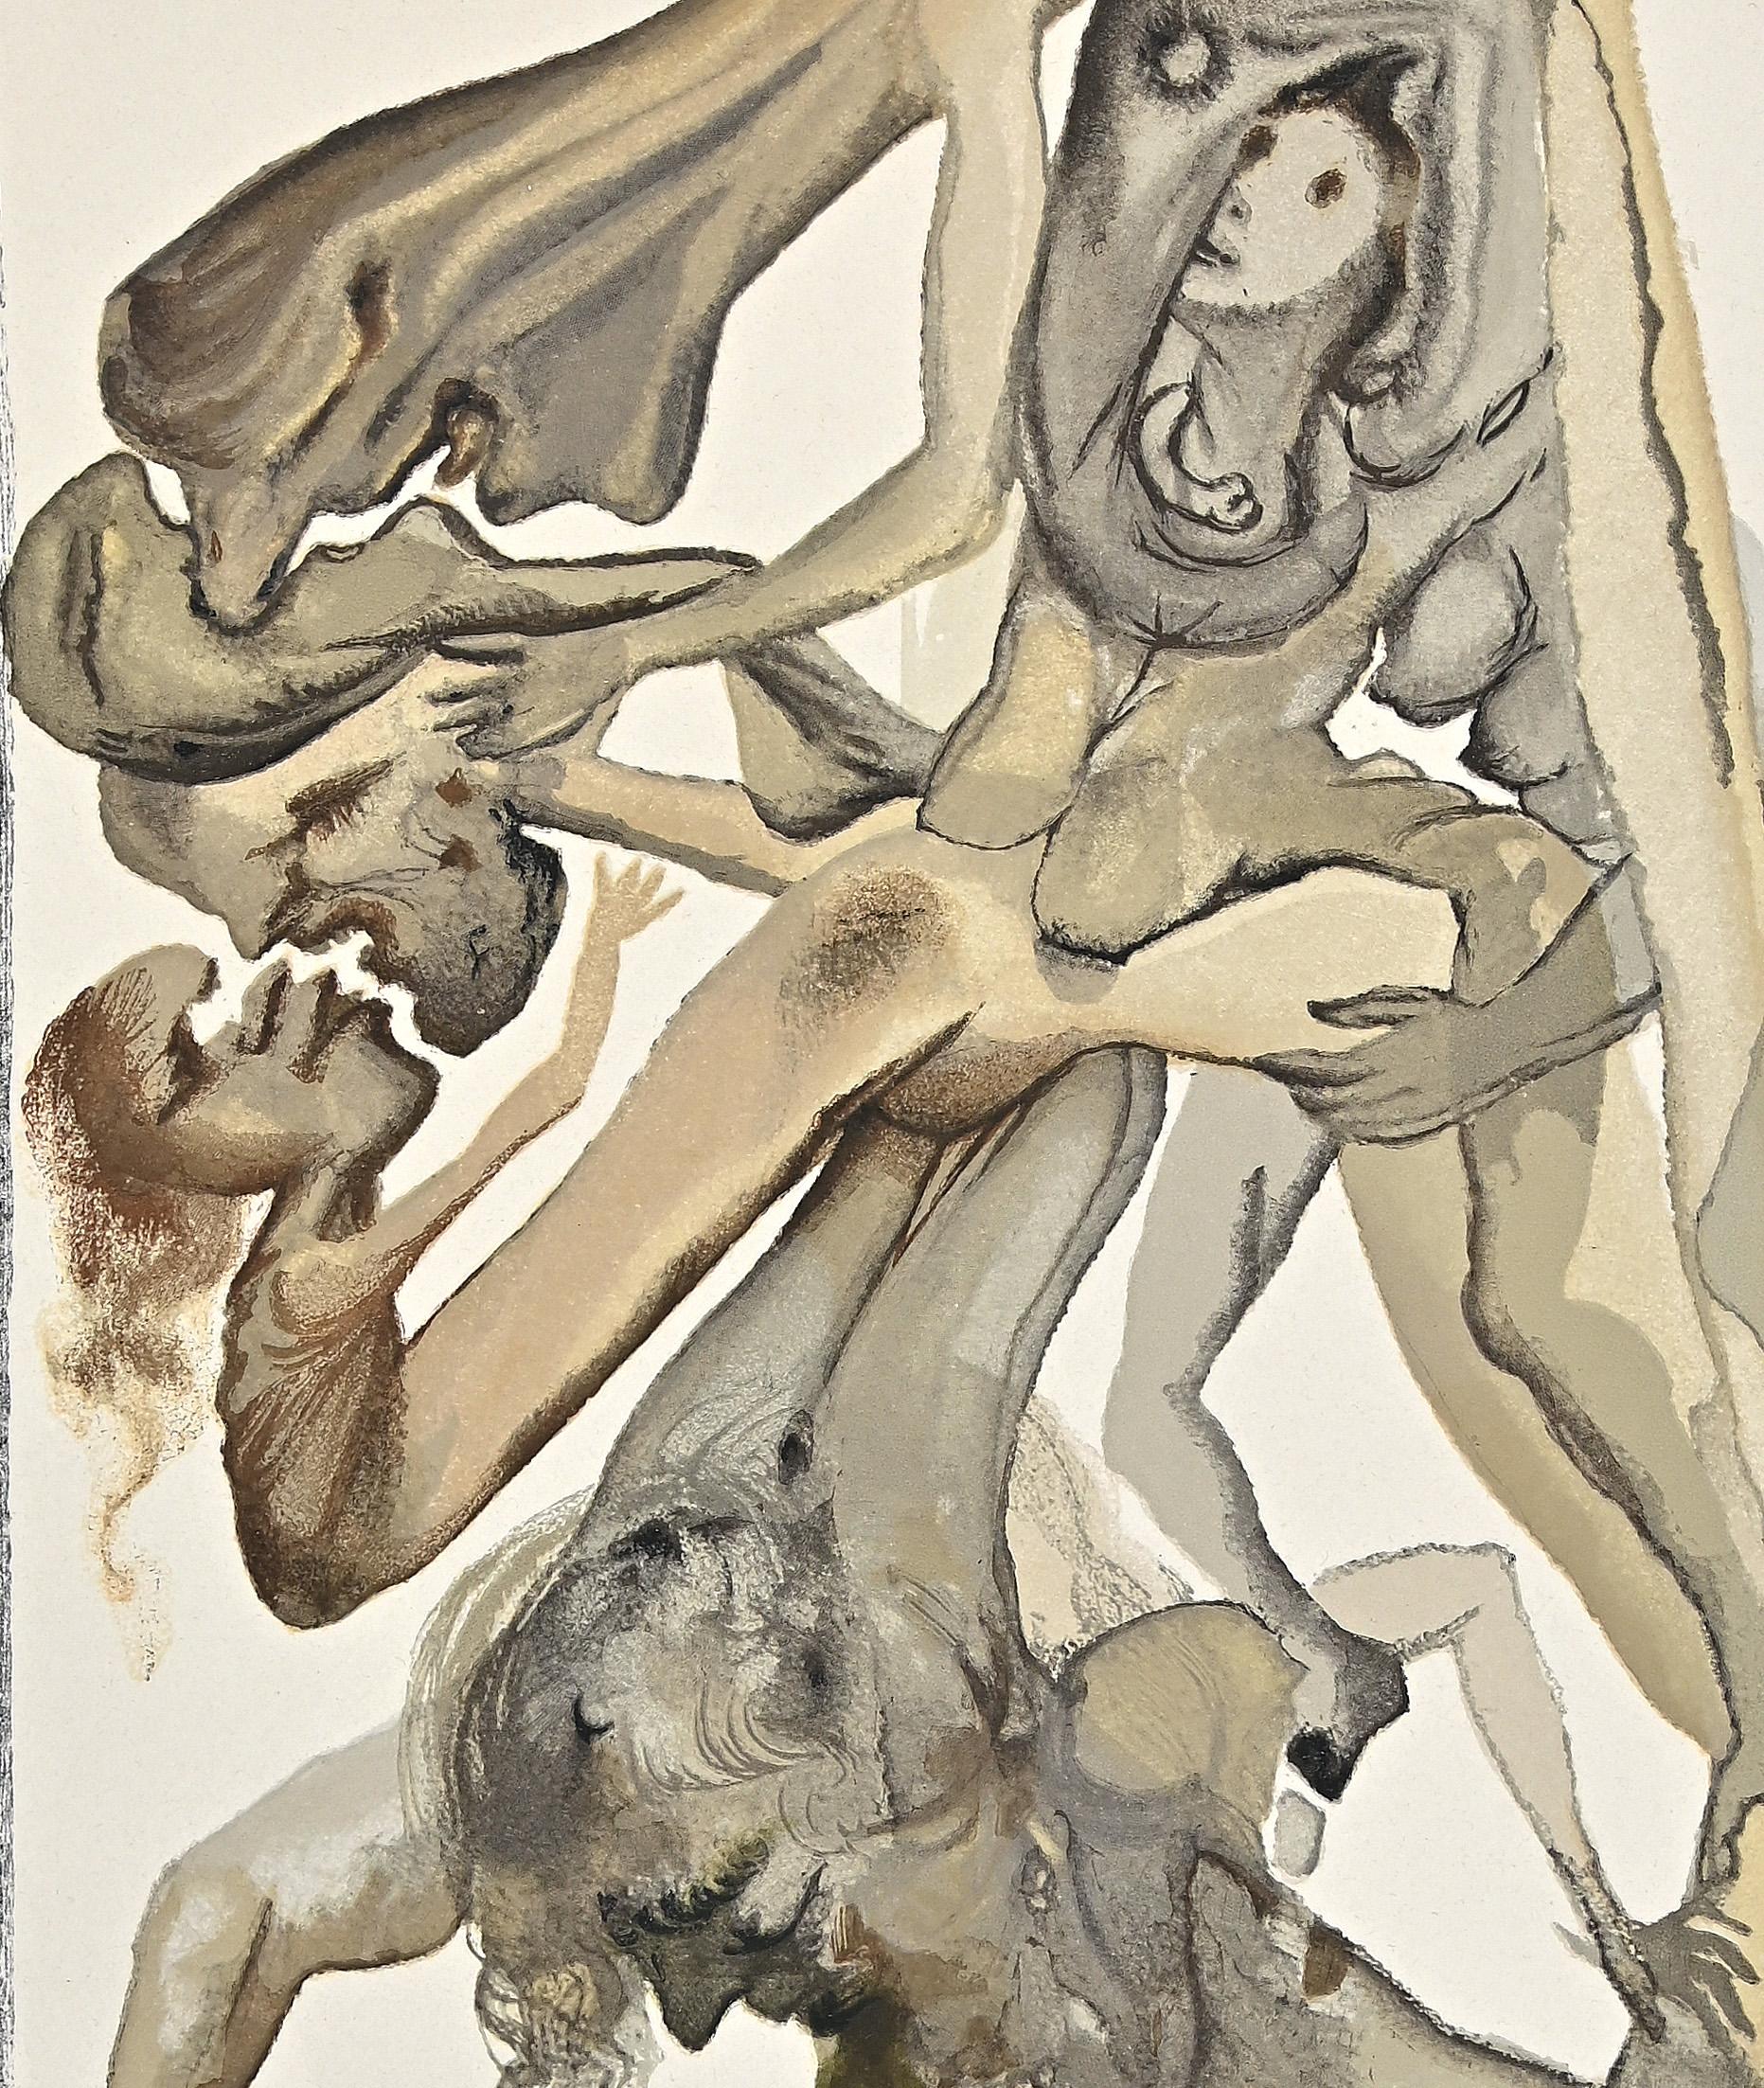 News of the Limbos - Original Woodcut attr. to Salvador Dalì - 1963 - Print by Salvador Dalí